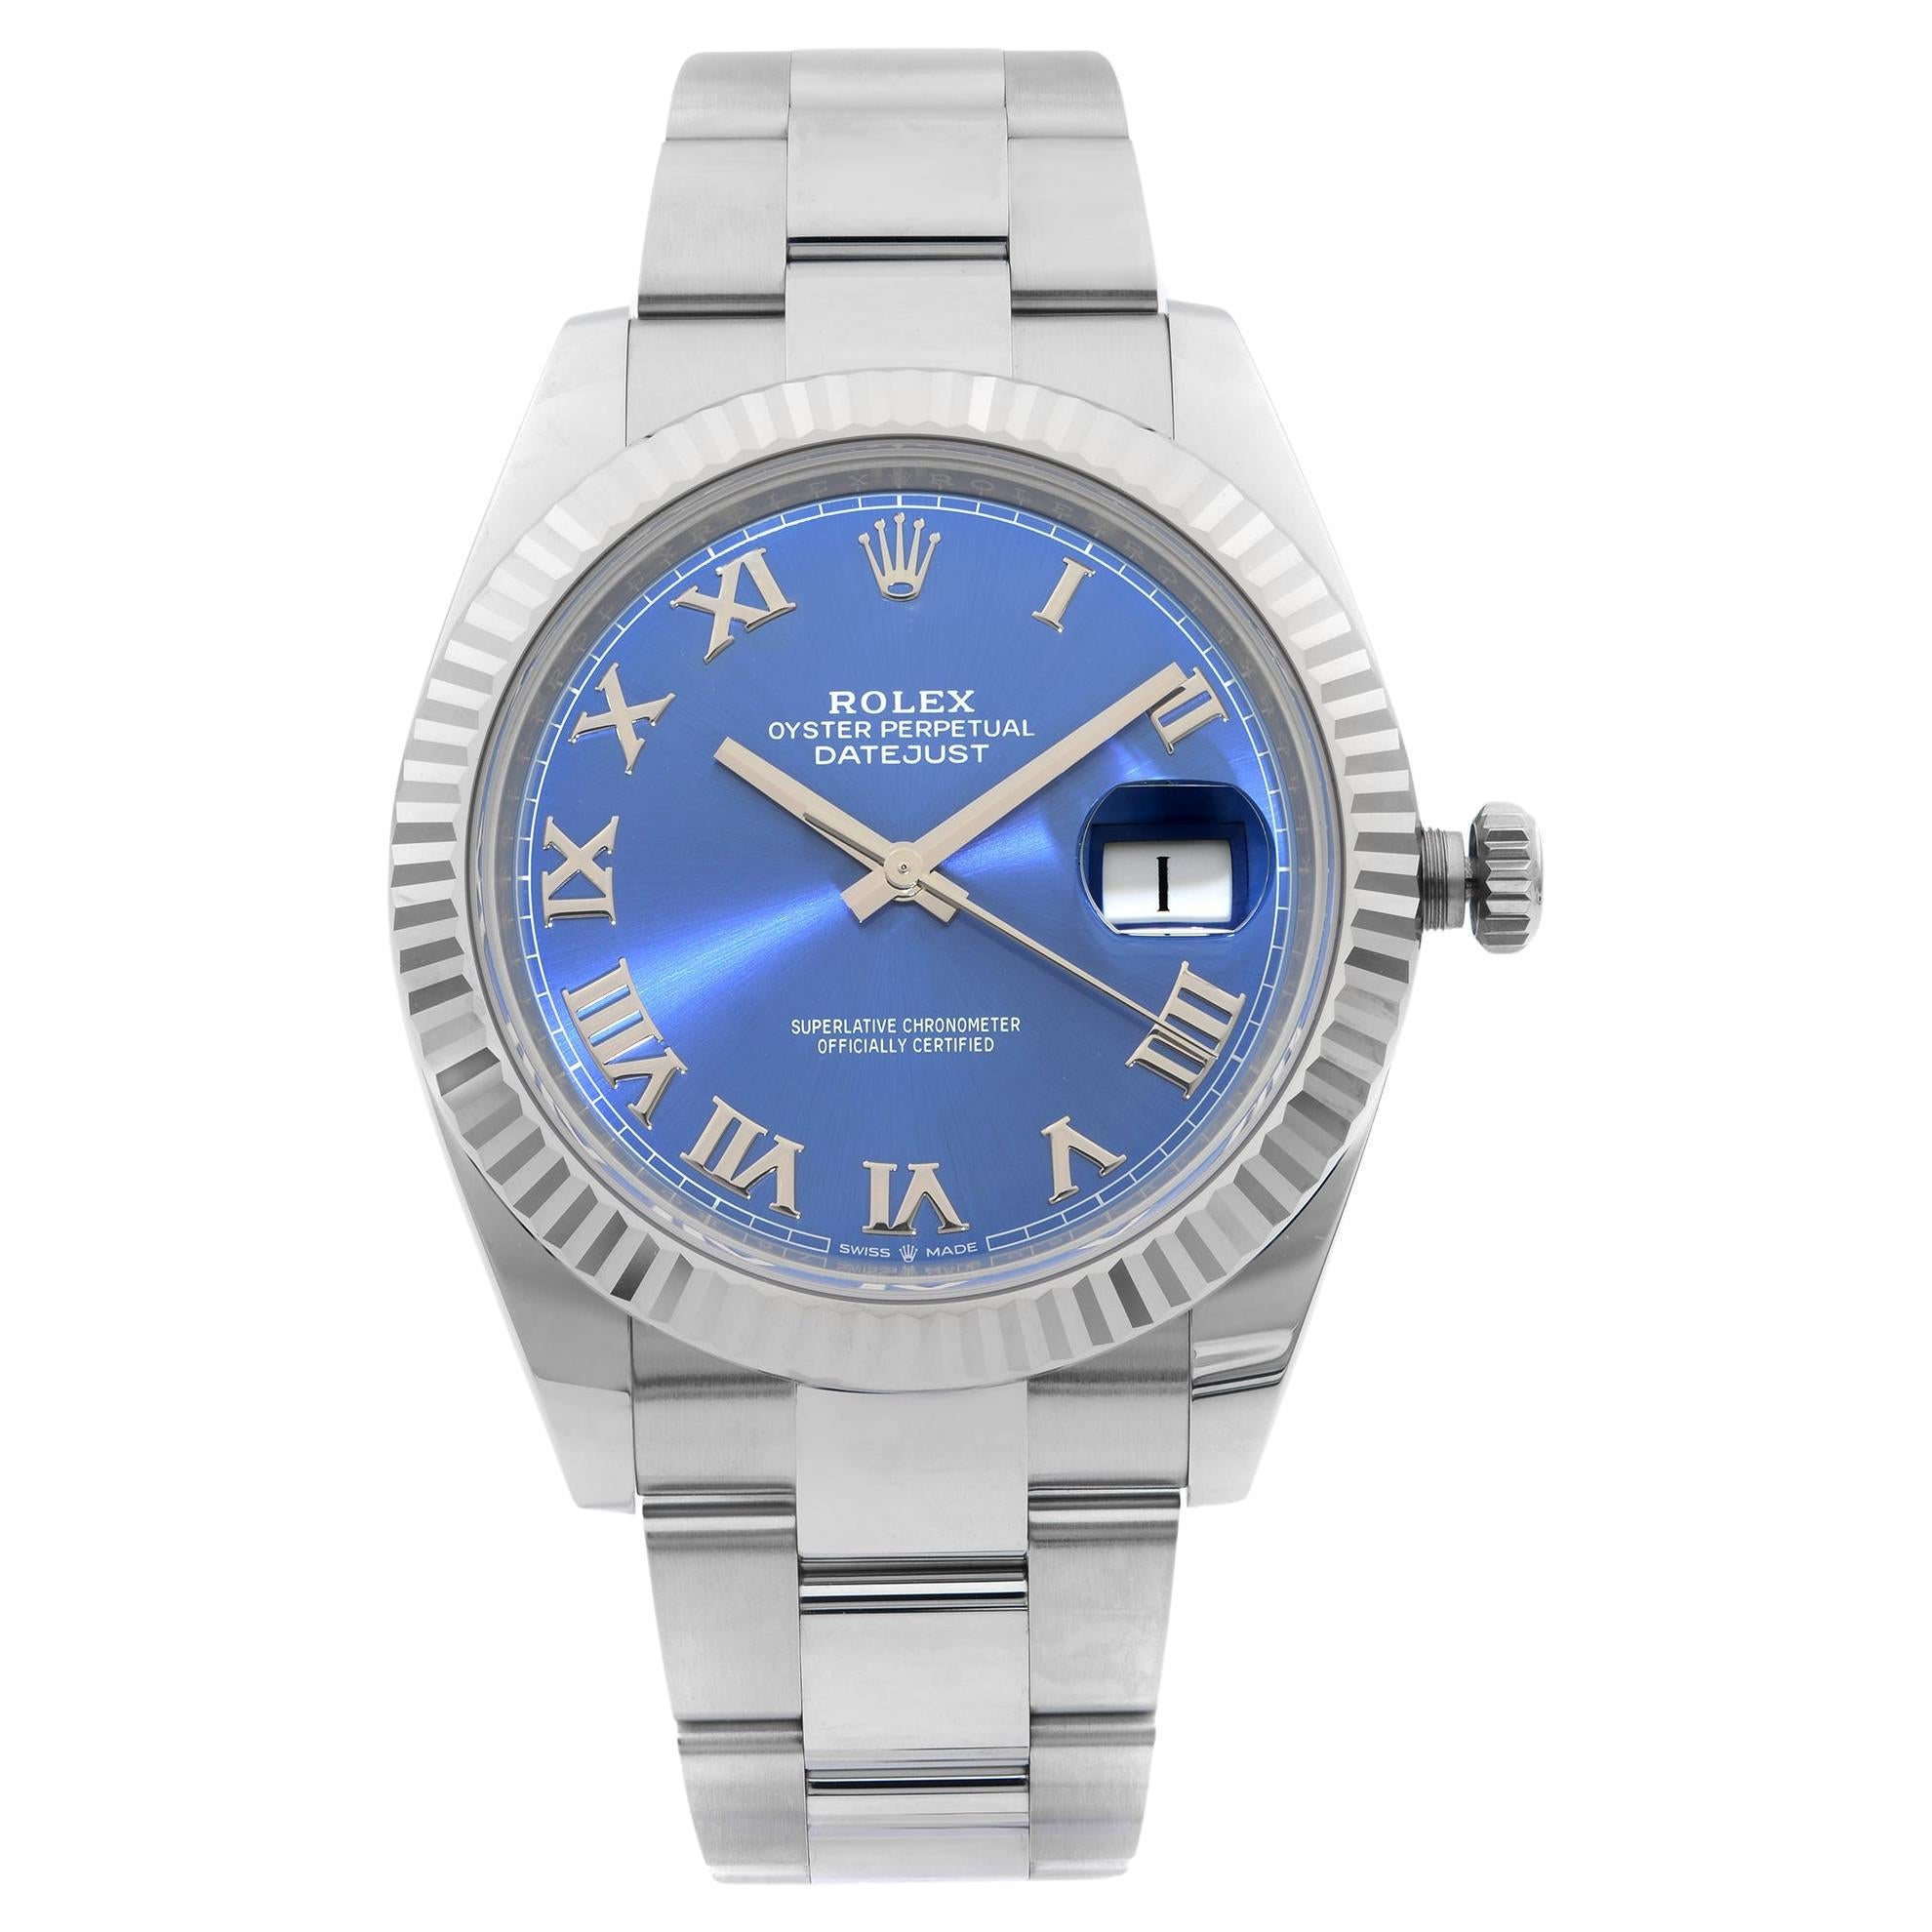 Rolex Datejust Oyster Band Steel 18K Gold Bezel Blue Dial Watch 126334 Unworn